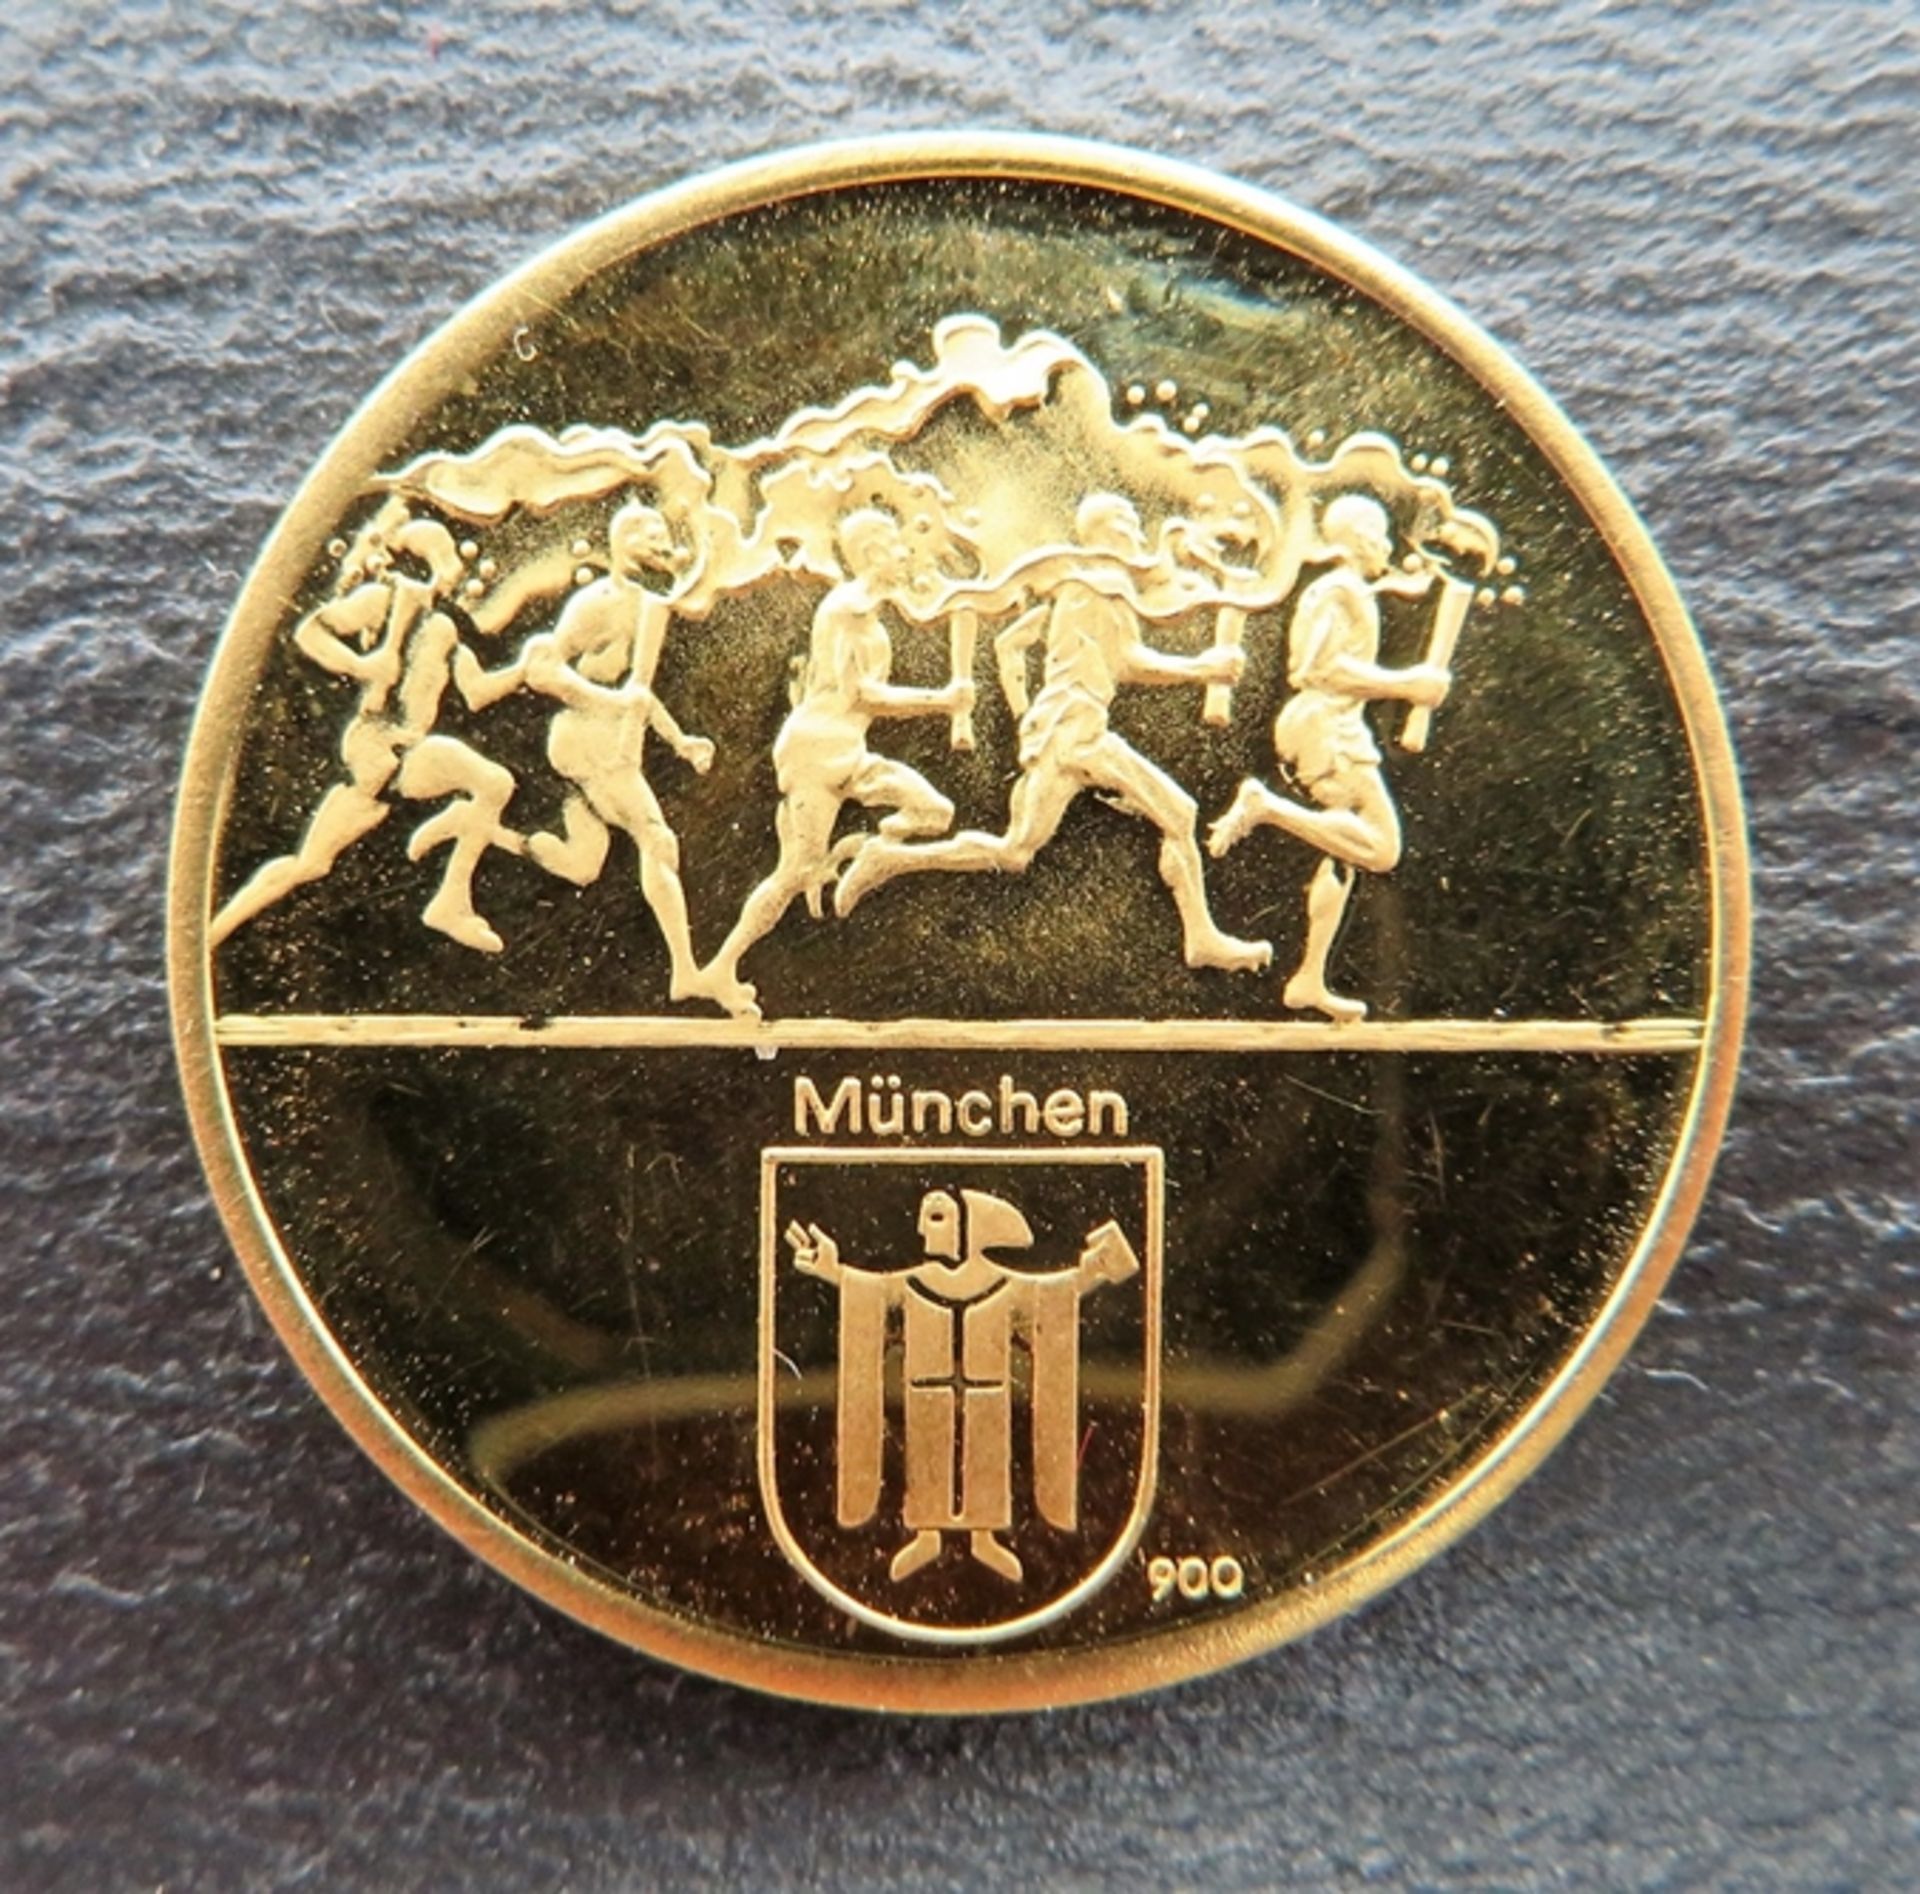 Goldmedaille, Spiele der XX. Olympiade München 1972, Gold 900/1000, gepunzt, 6,99 g, PPminb, d 2,4 